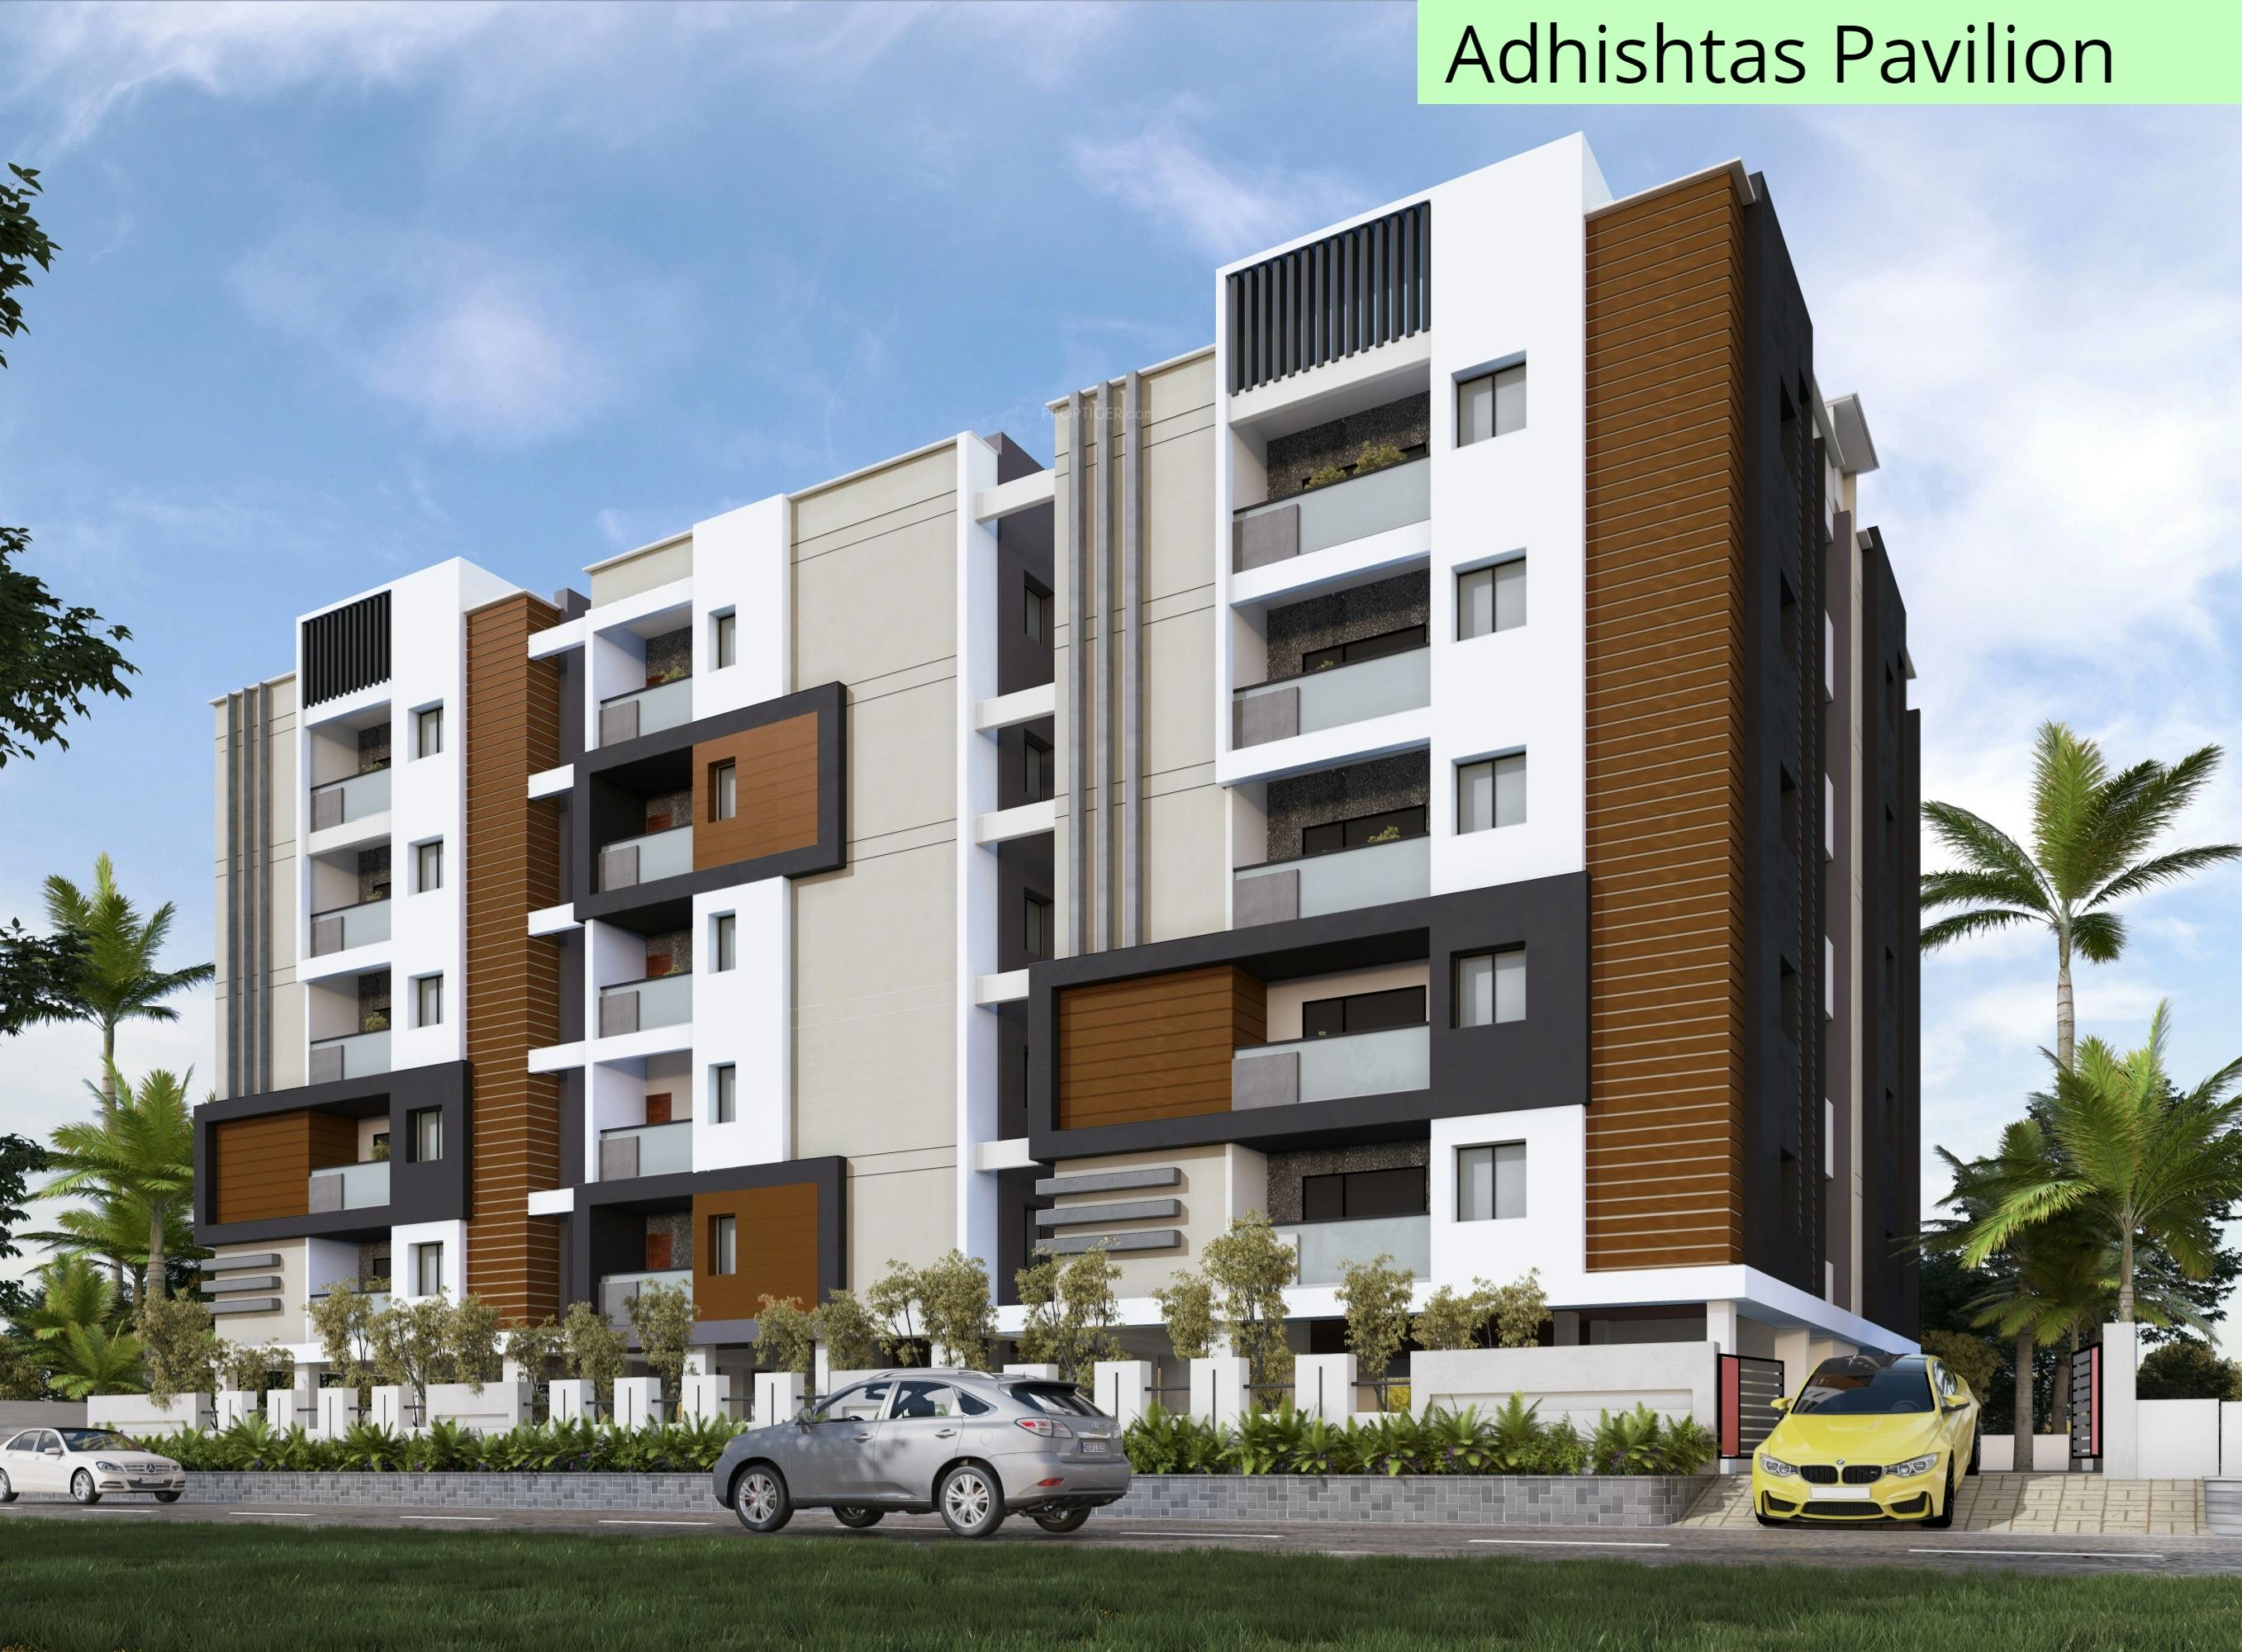 Floor plan for Adhishtas Pavilion